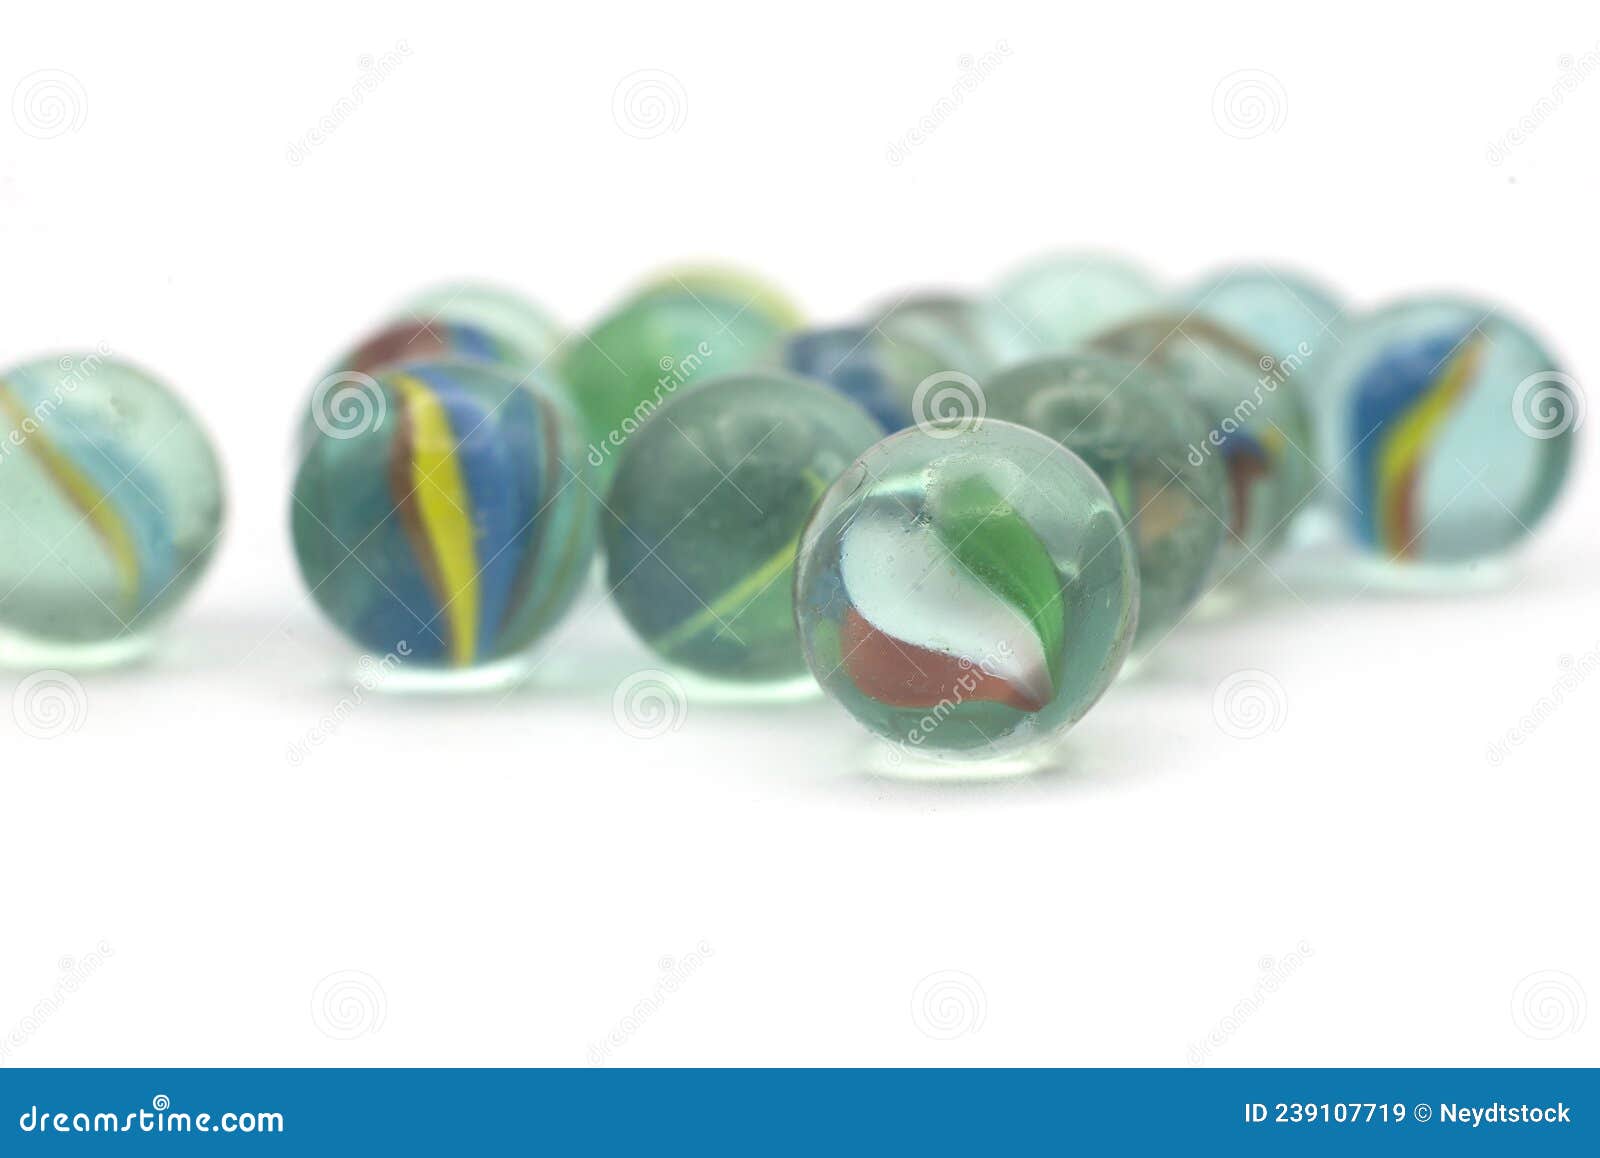 recreative small glass balls on white background